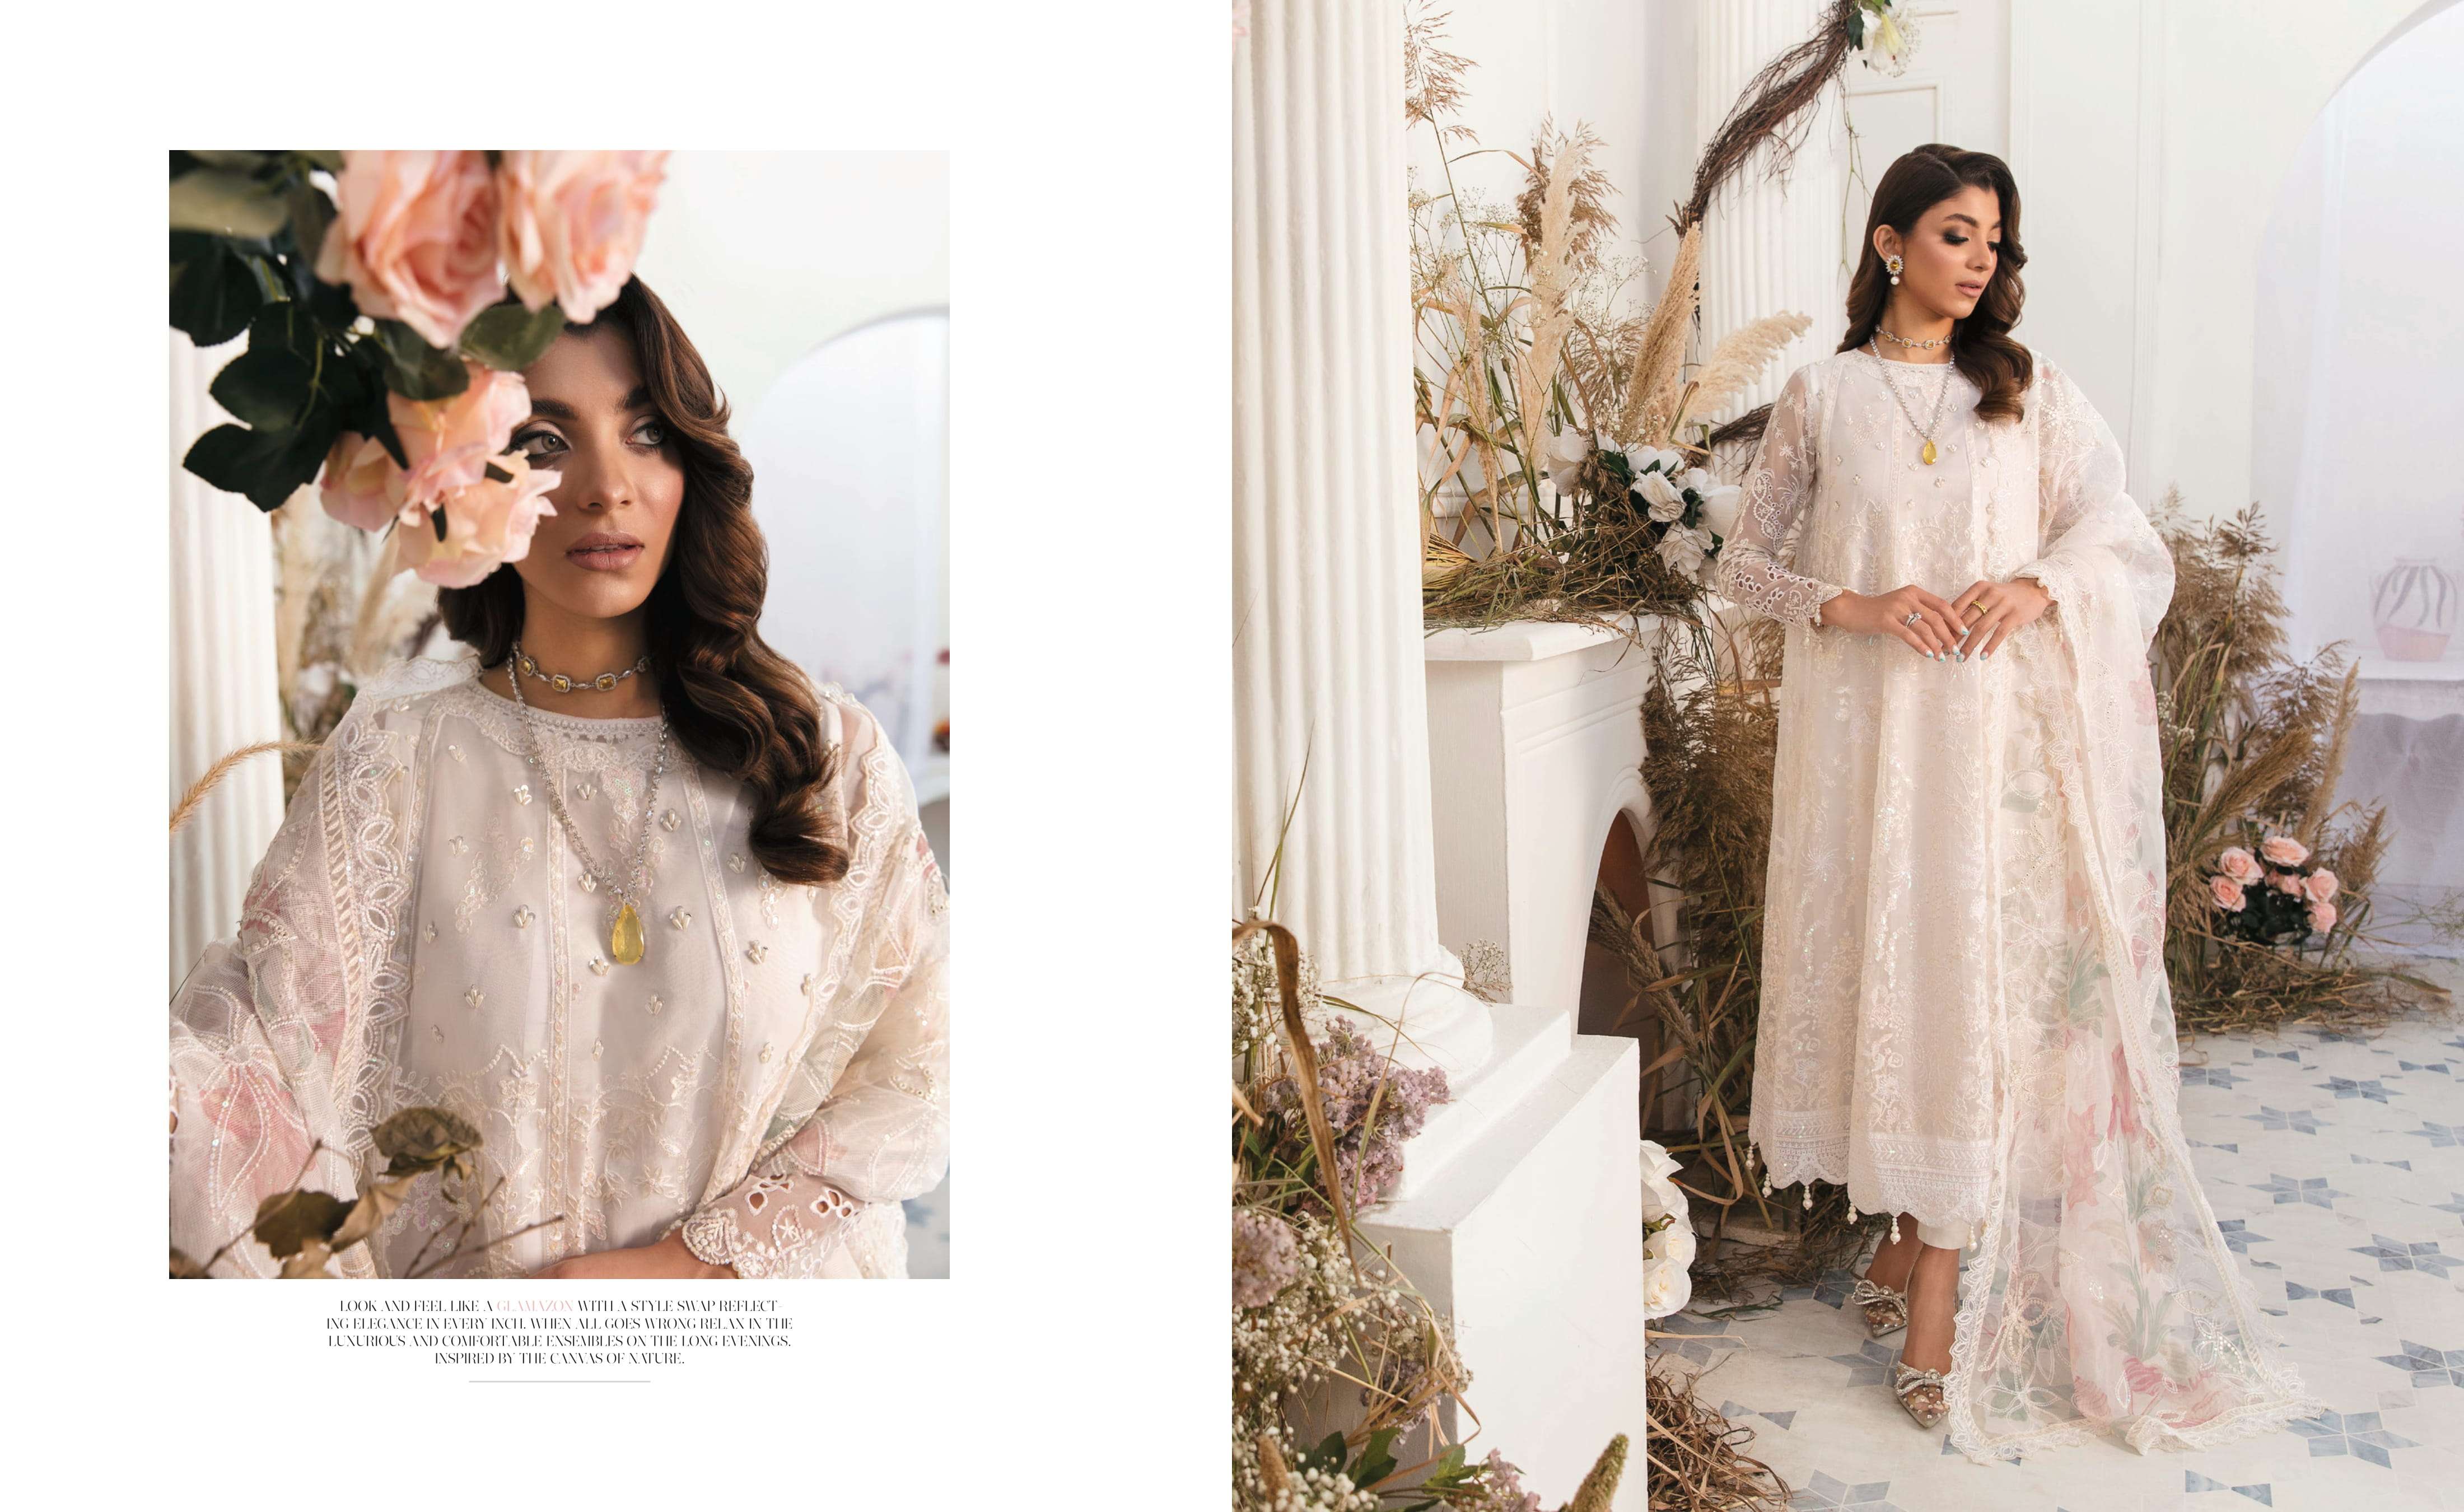 Stunning White Pakistani Dresses 2021